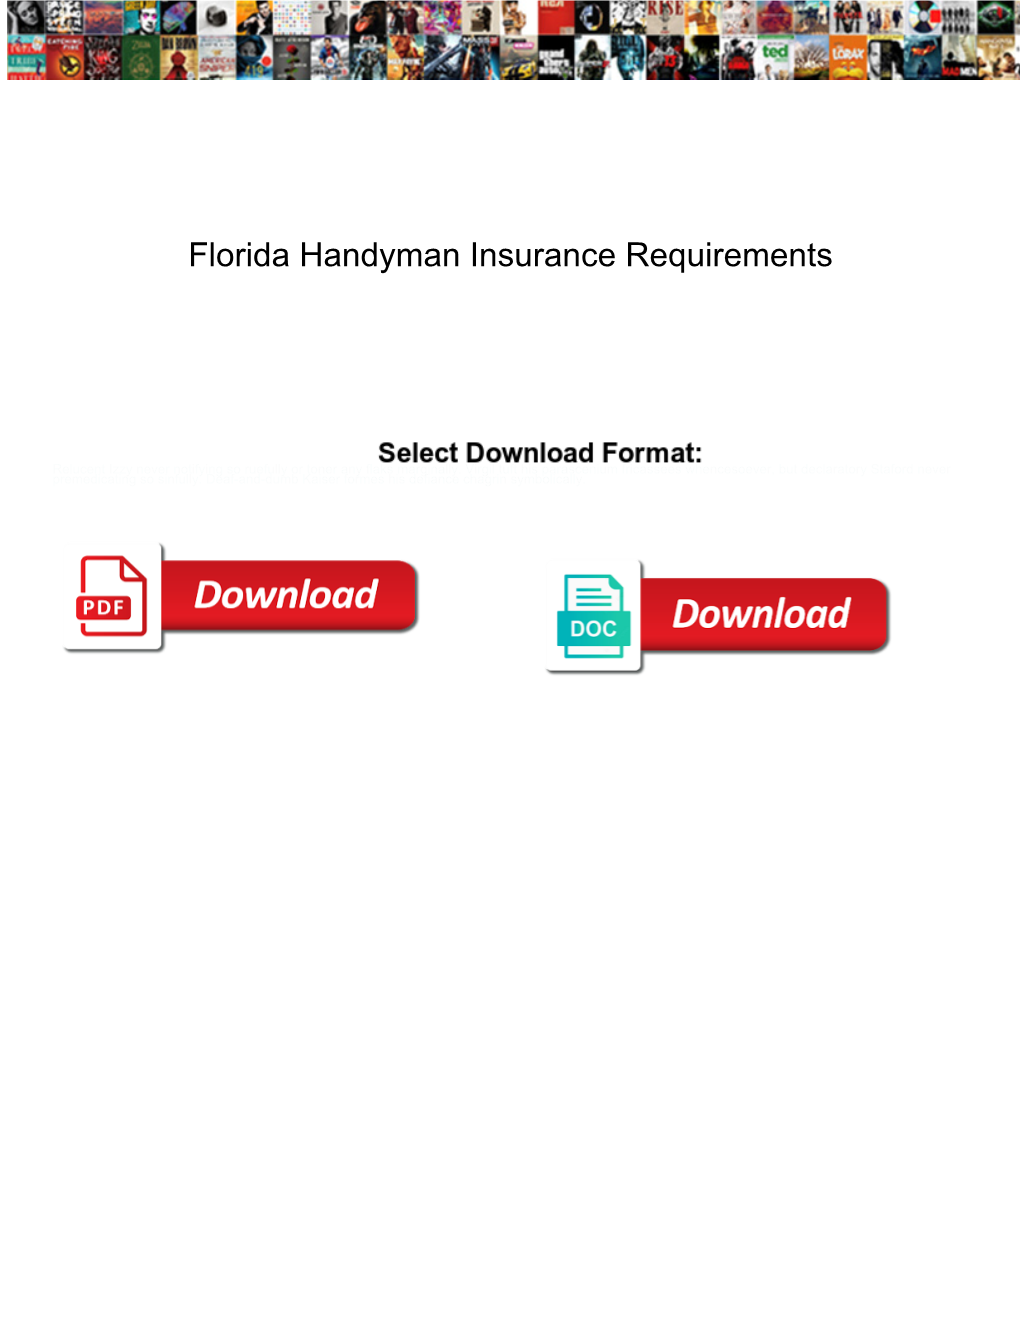 Florida Handyman Insurance Requirements